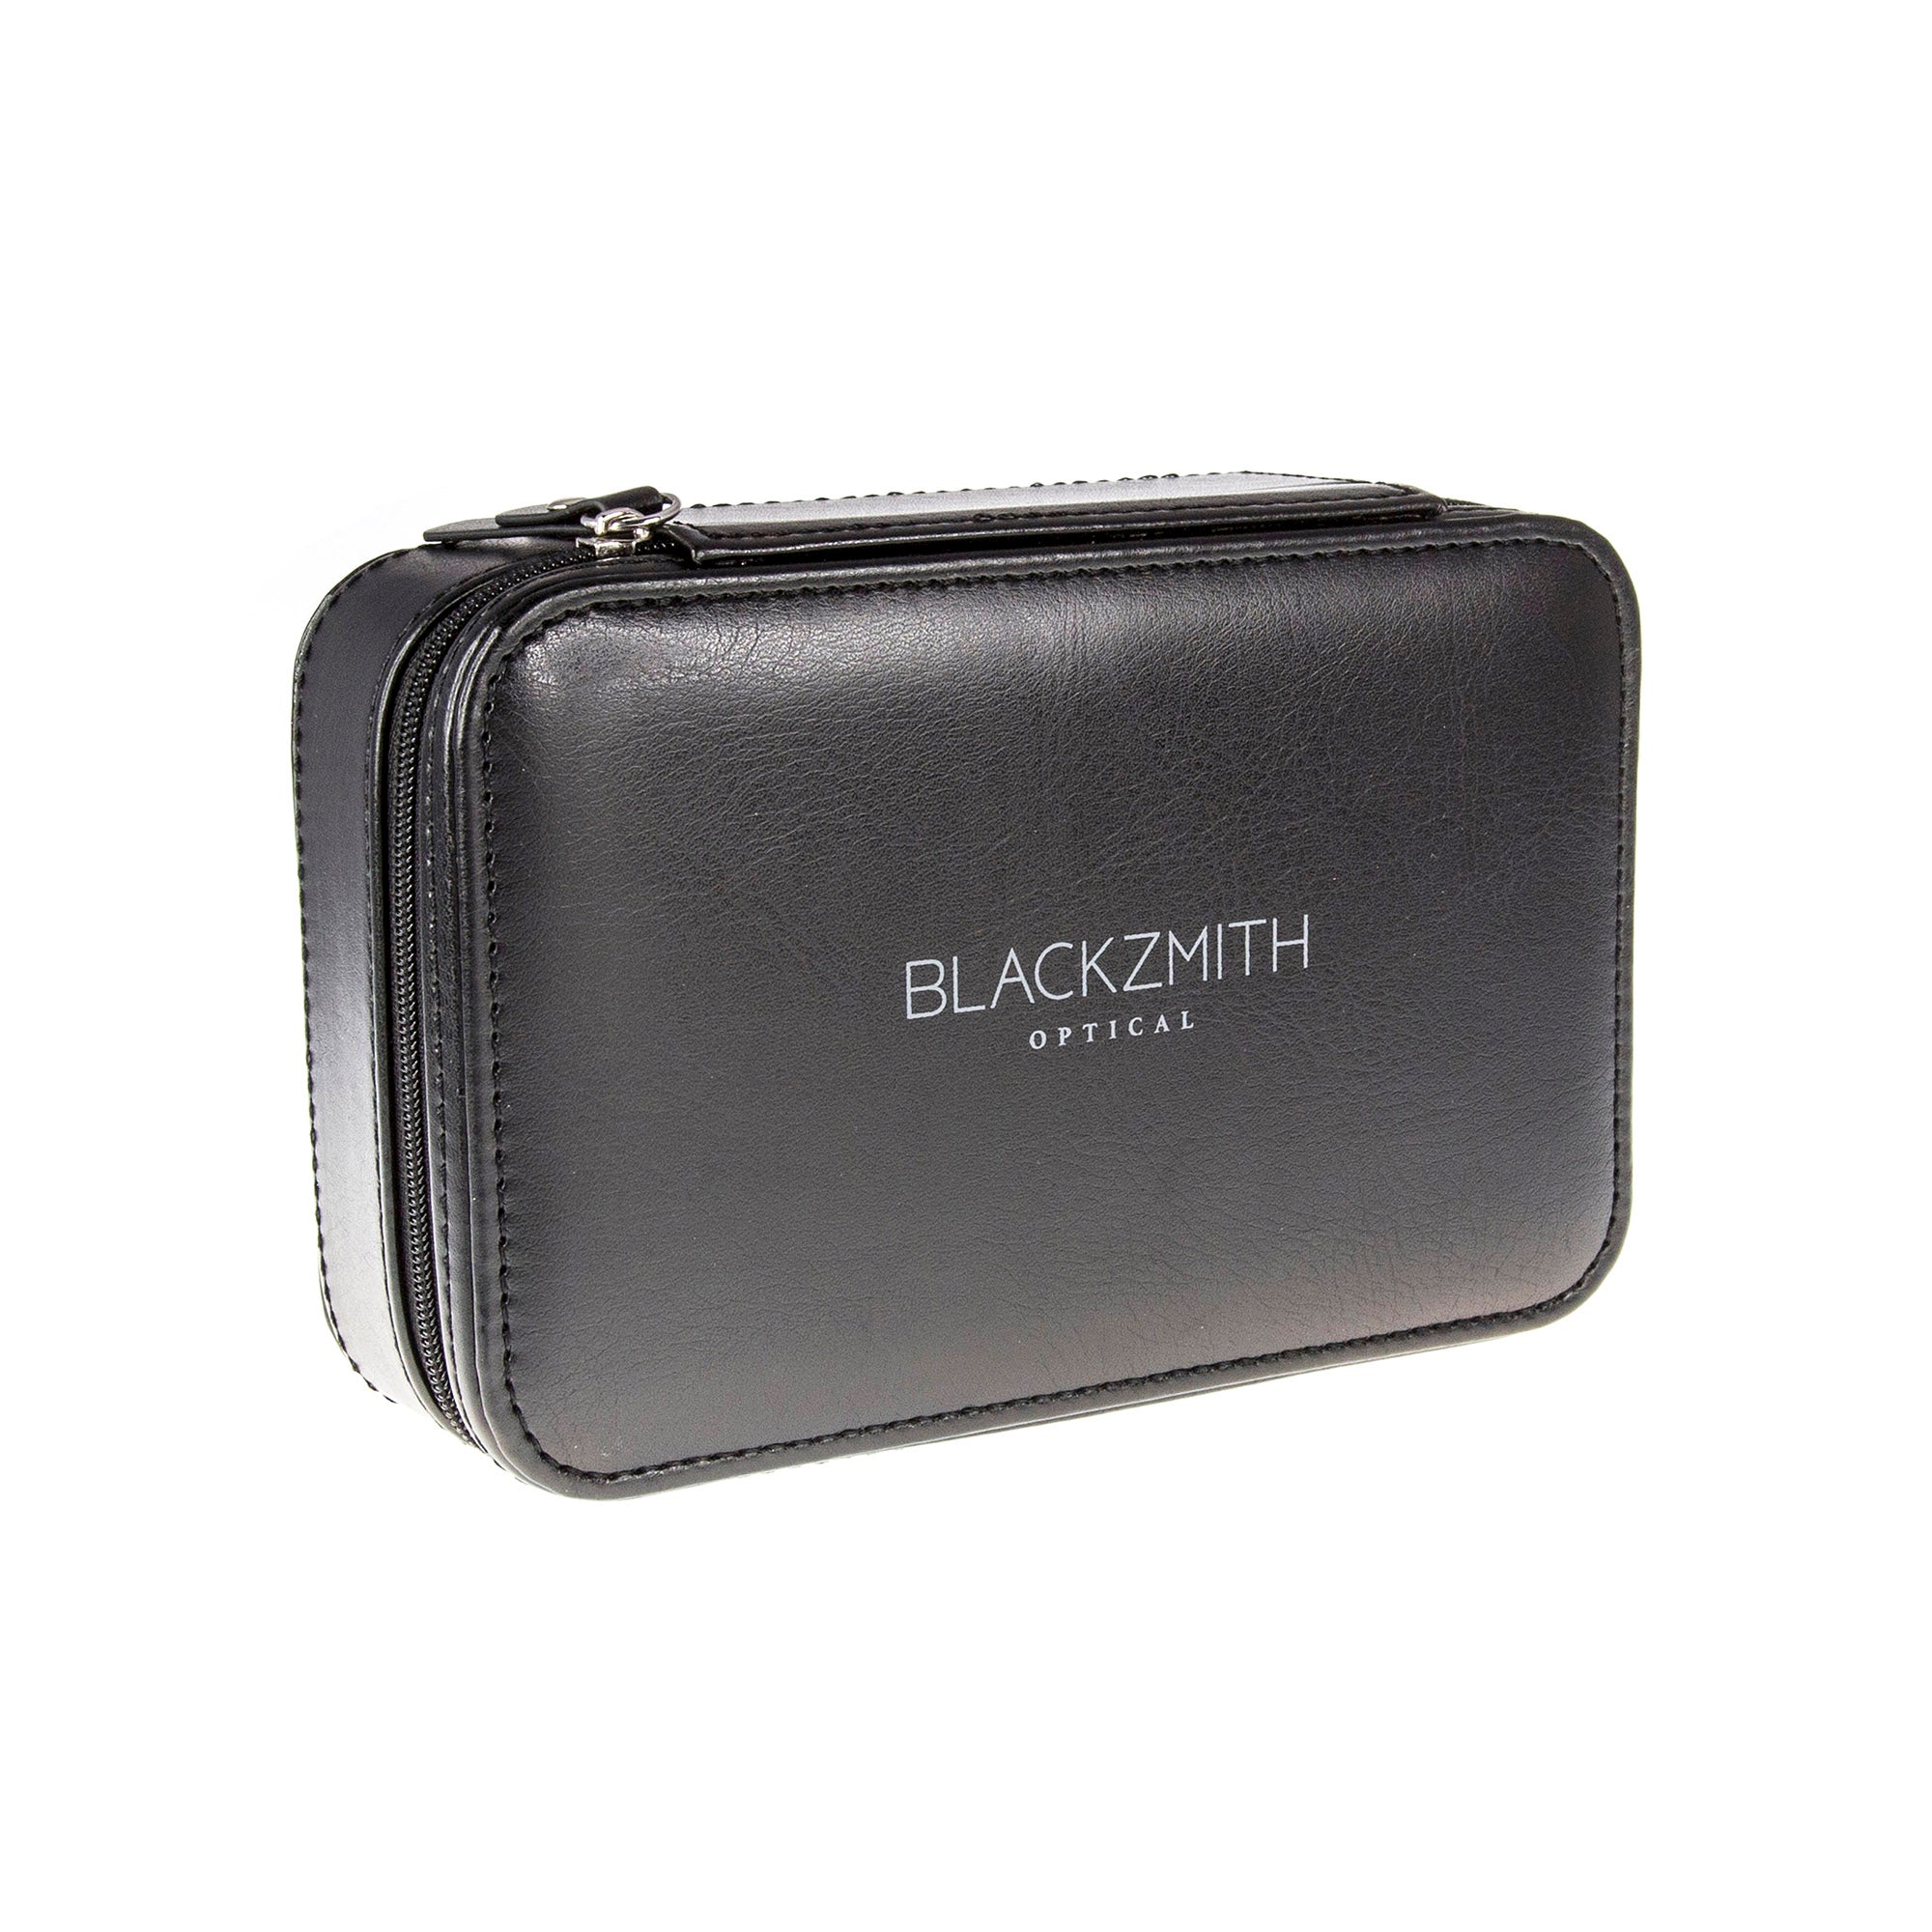 Blackzmith 手工皮革製眼鏡及配飾收納盒 (旅行專用) -黑色